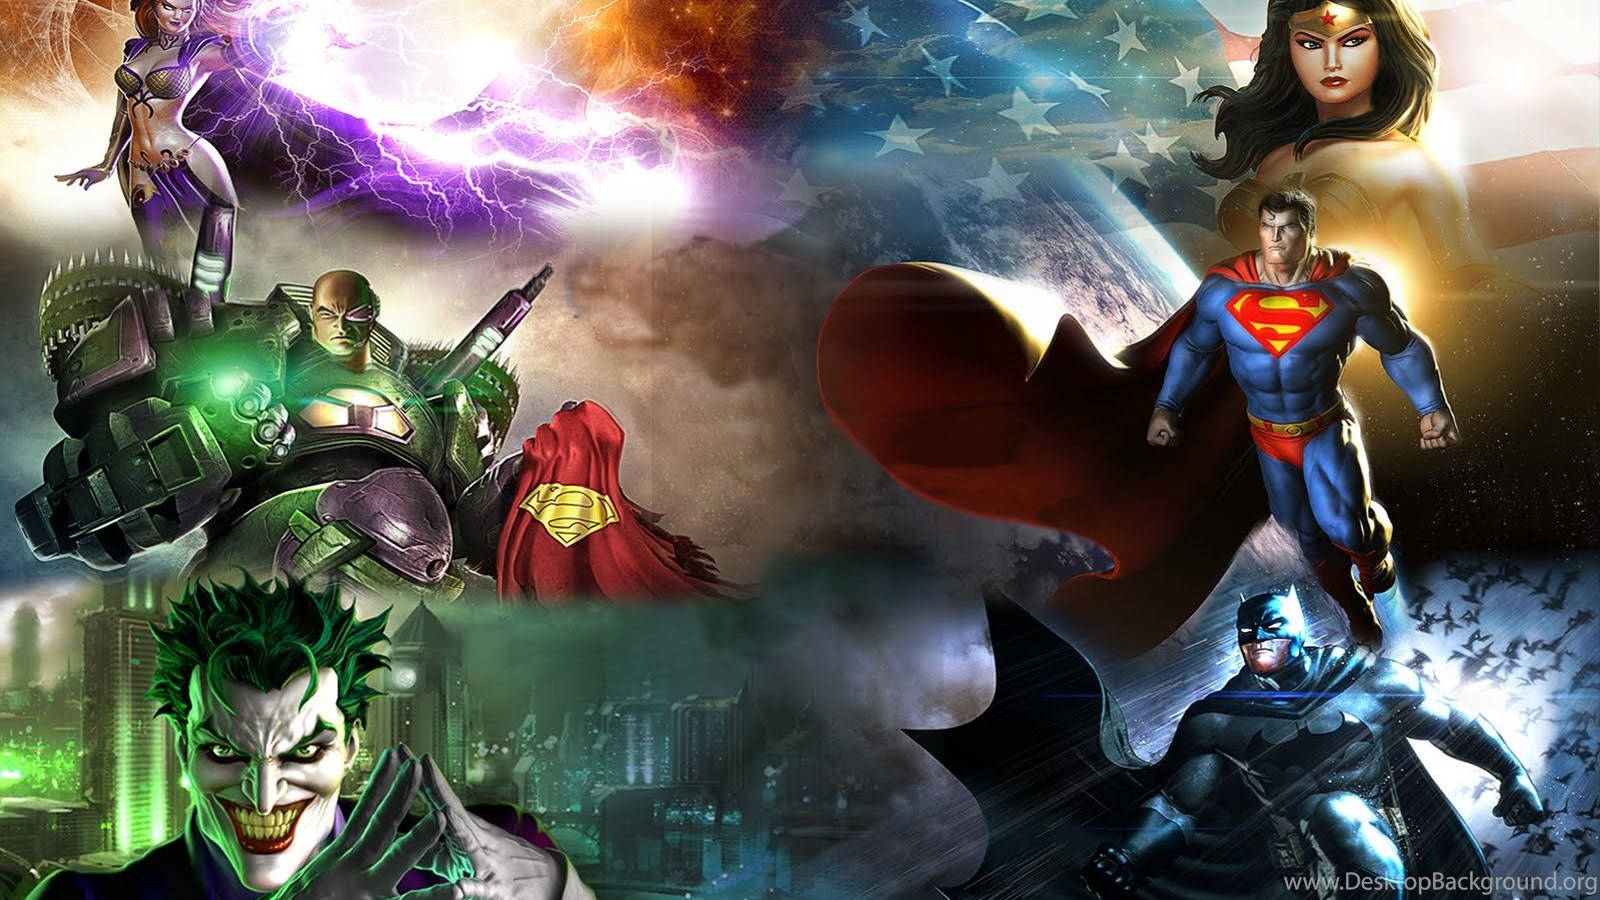 DC Universe Online Superheroes Versus Supervillains Fanart Wallpaper